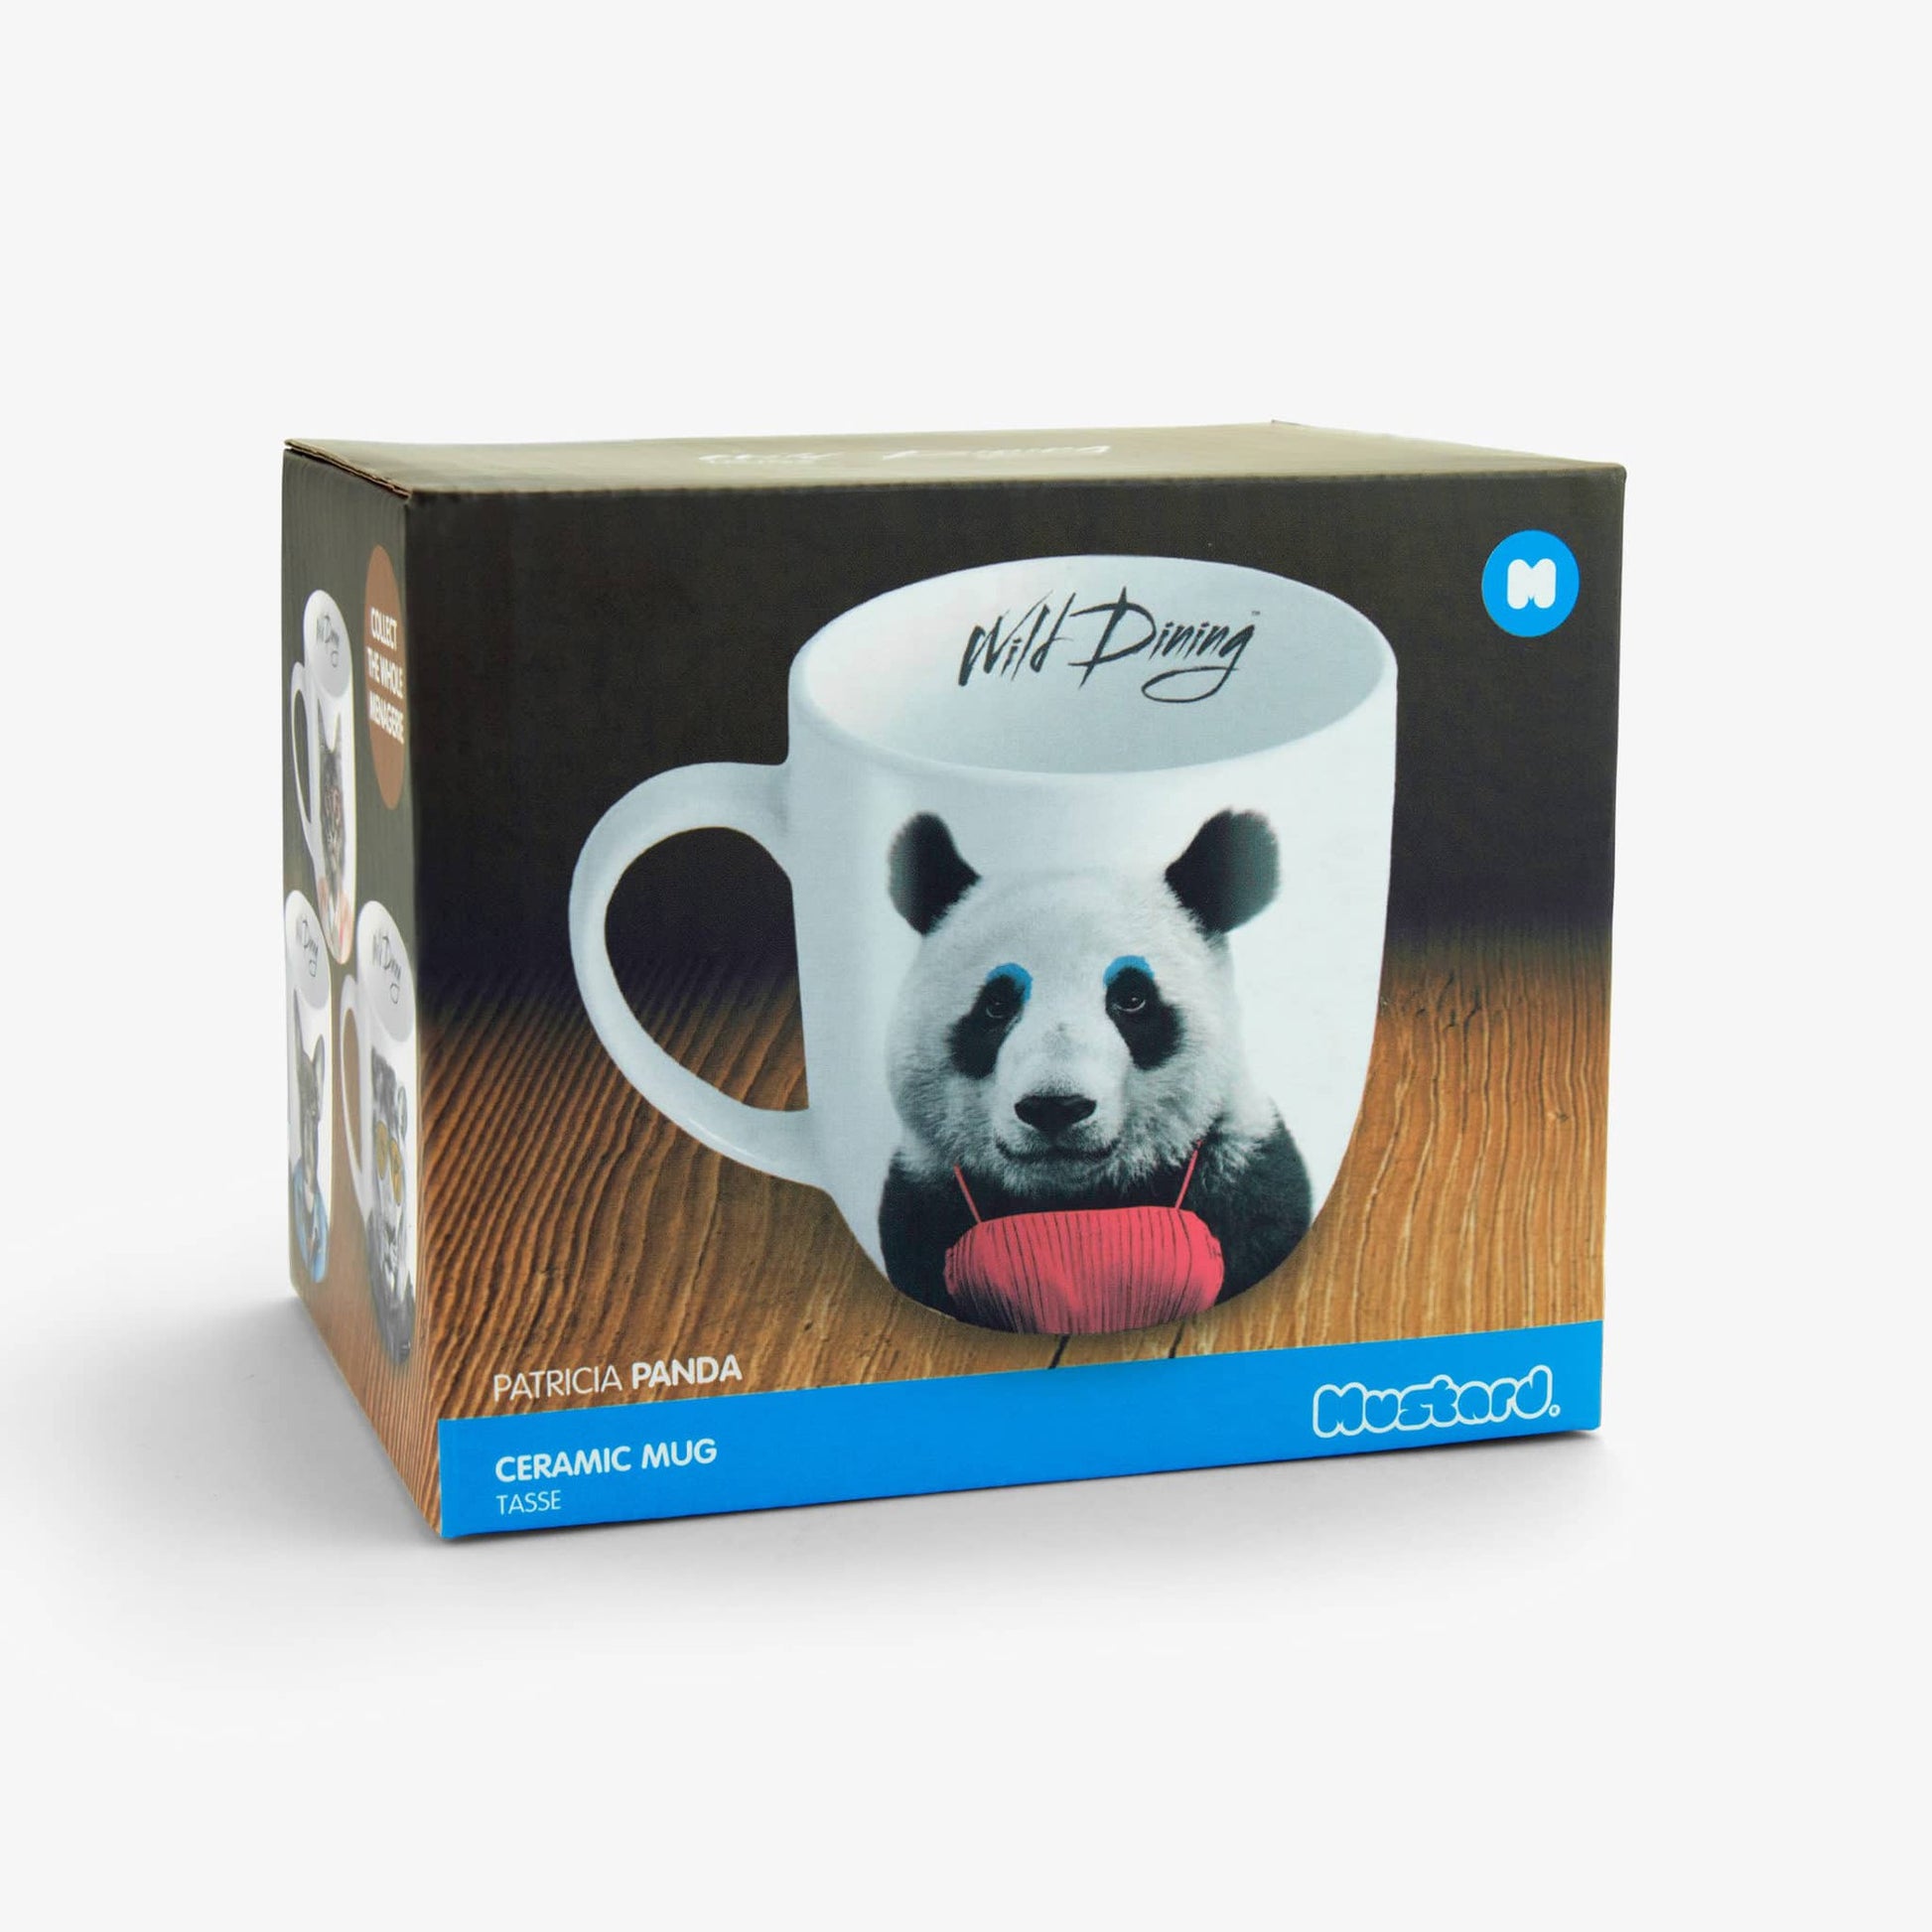 Patricia Panda Wild Dining Coffee Mug | Novelty Ceramic Mug in a Gift Box